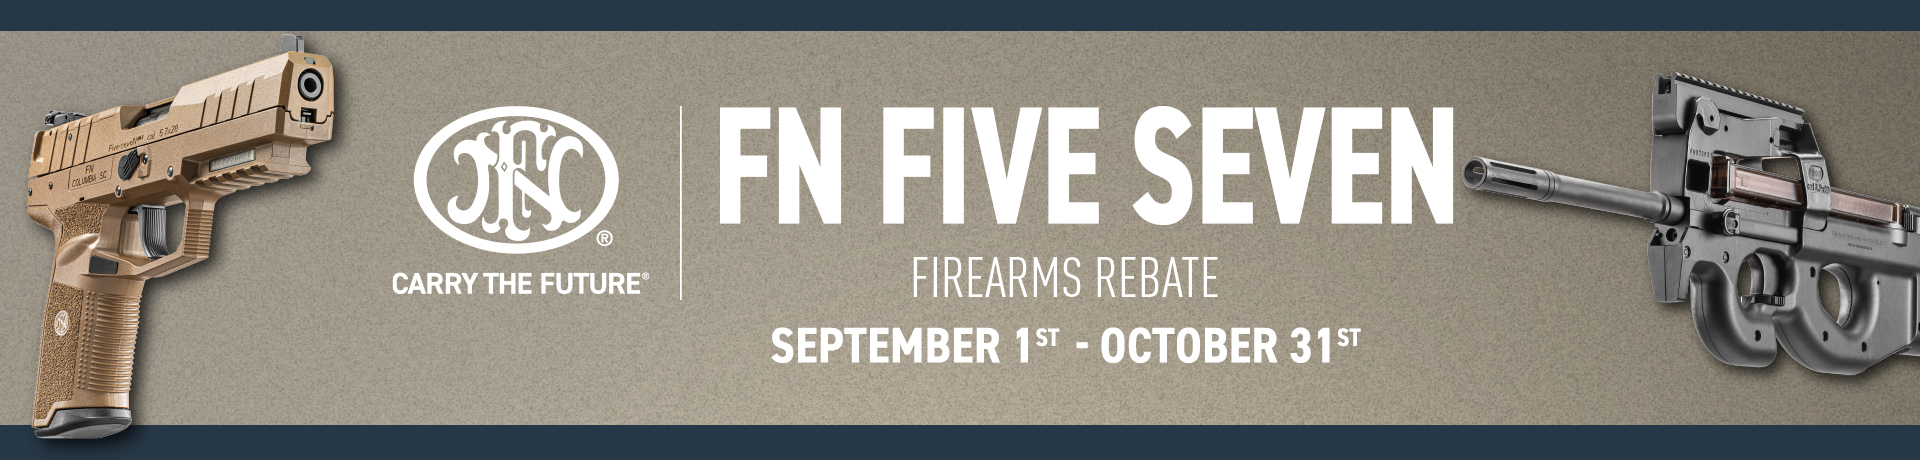 fn-five-seven-firearms-rebate